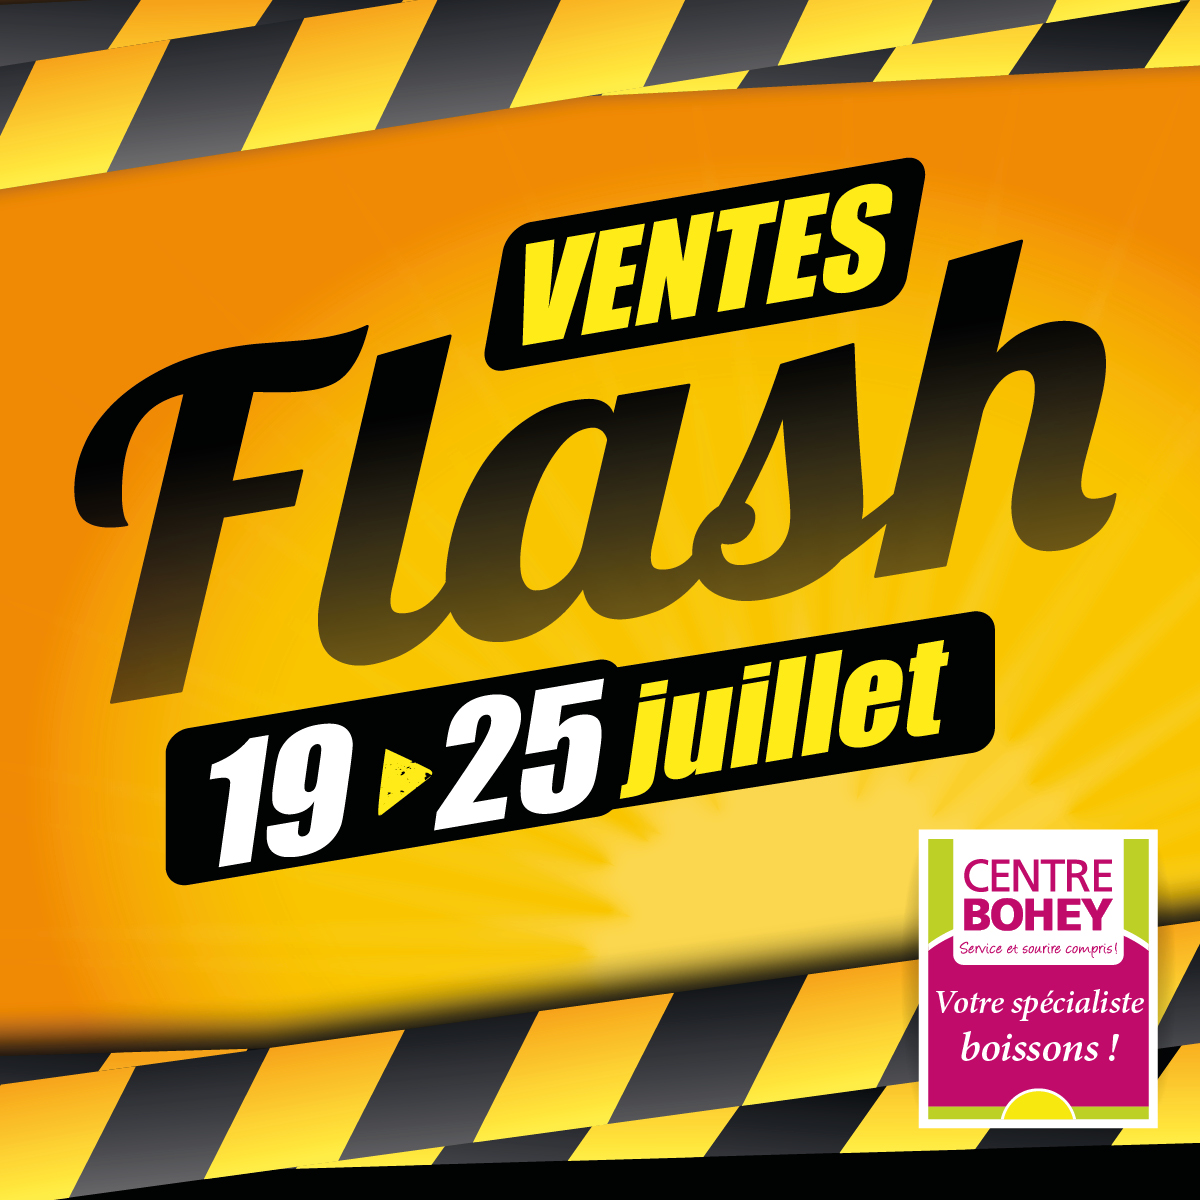 Ventes Flash  19 > 25 juillet - Centre Bohey